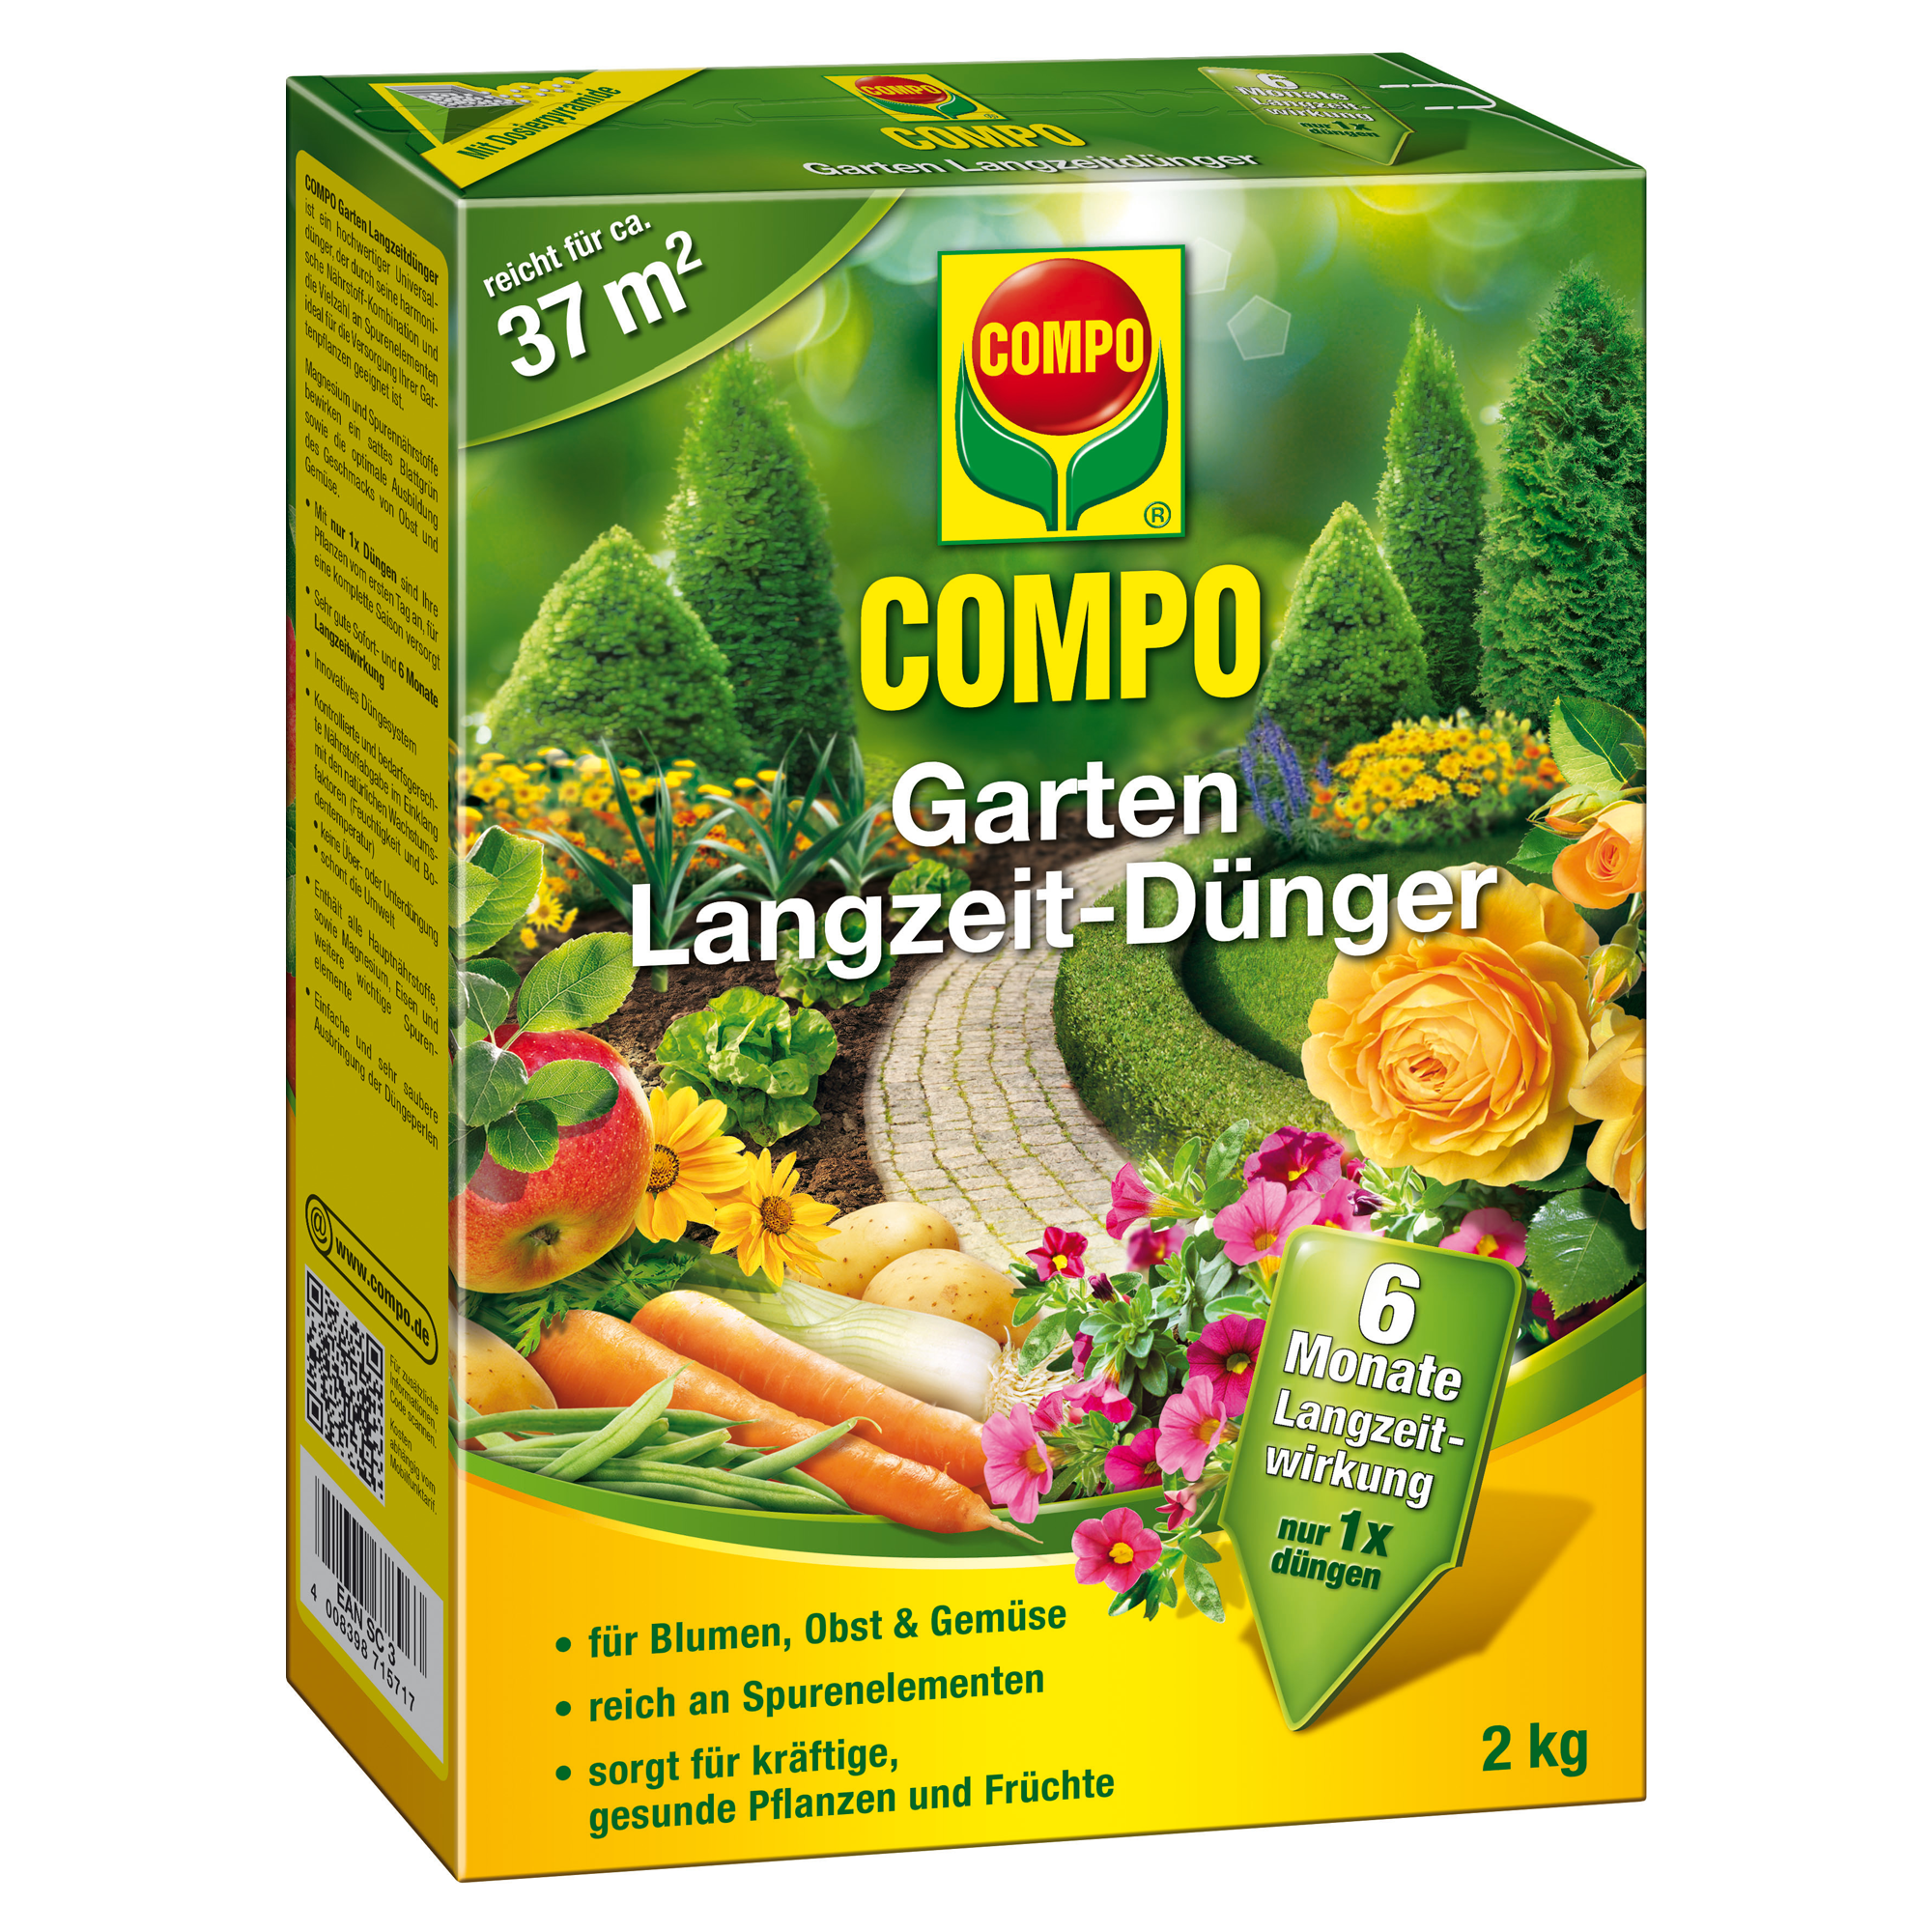 Garten-Langzeitdünger 2 kg + product picture